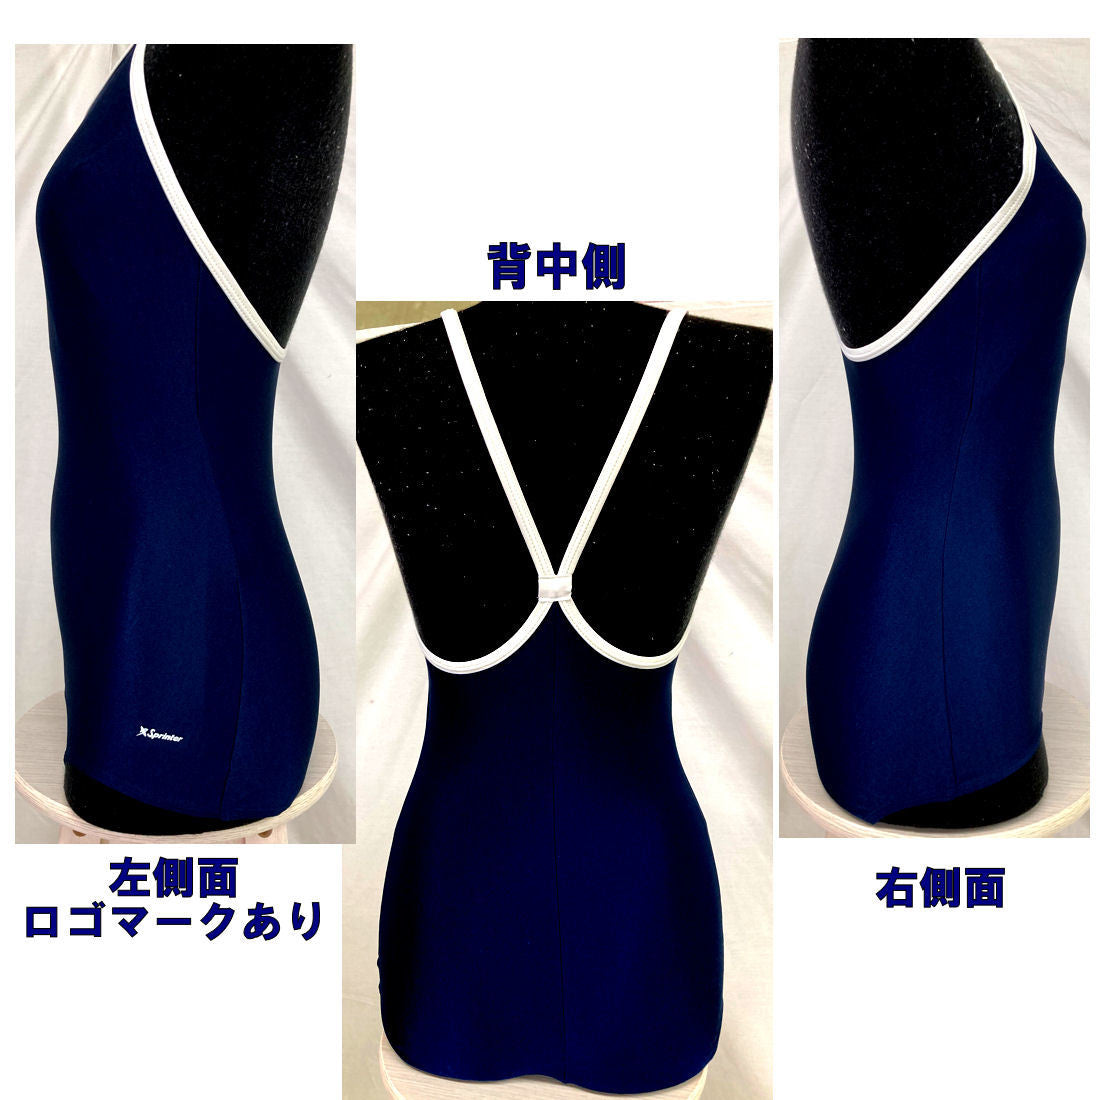 3L・カンコー・女子スクール水着ワンピース型・紺×白 - 水泳